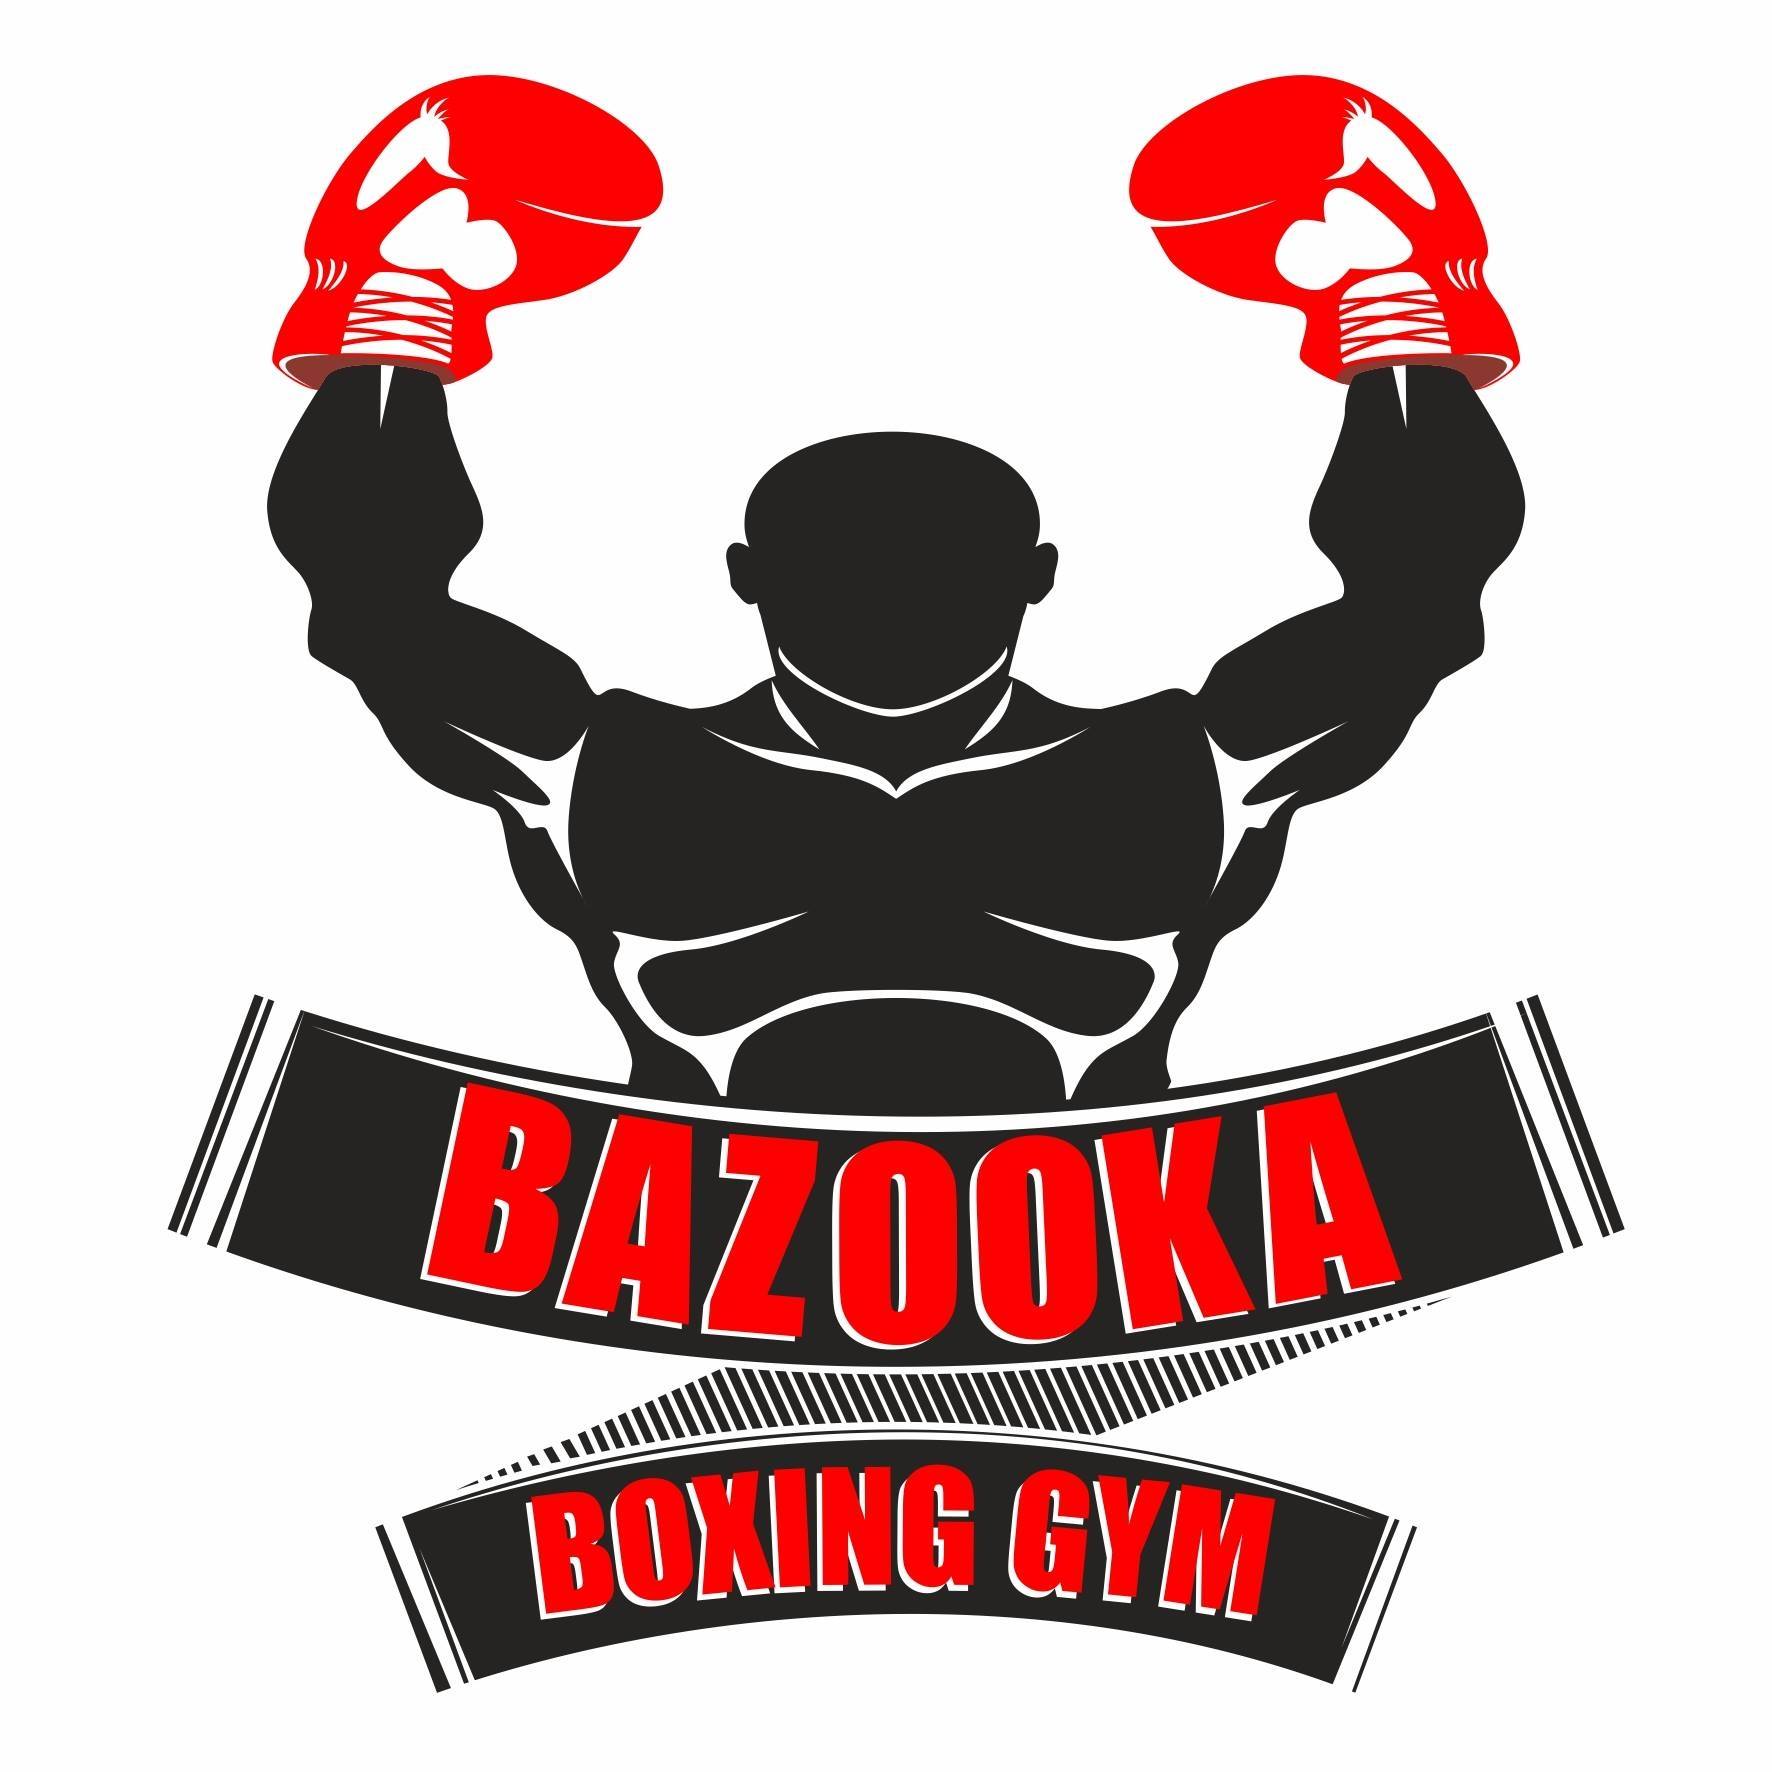 Bazooka Boxing GYM - Boxing Gyms Near Me